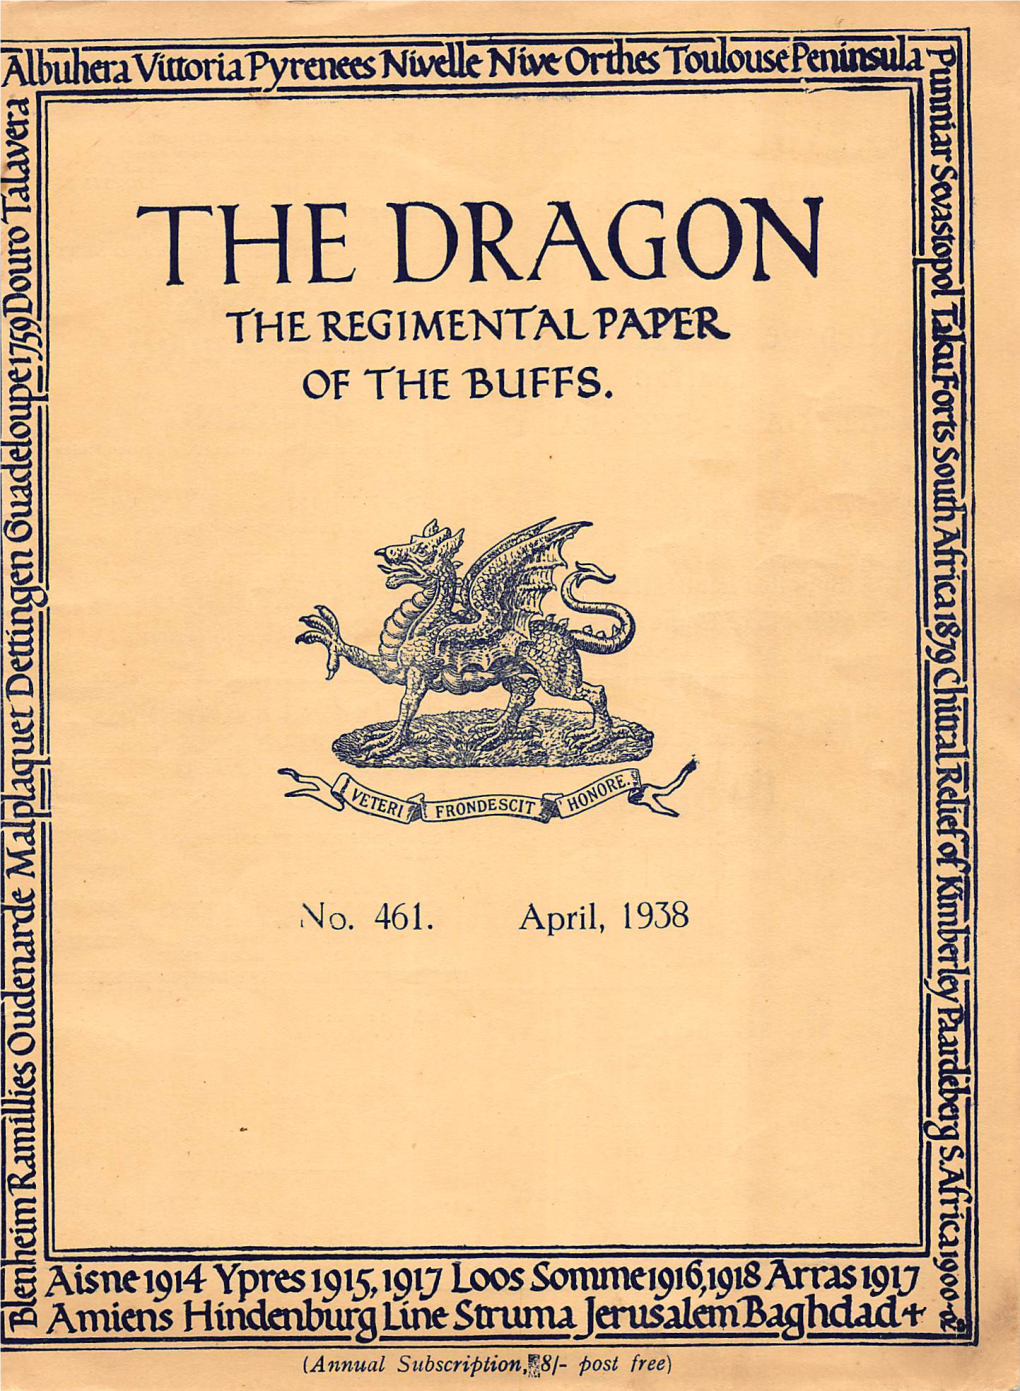 The Dragon the -Reg I Mental -Paper